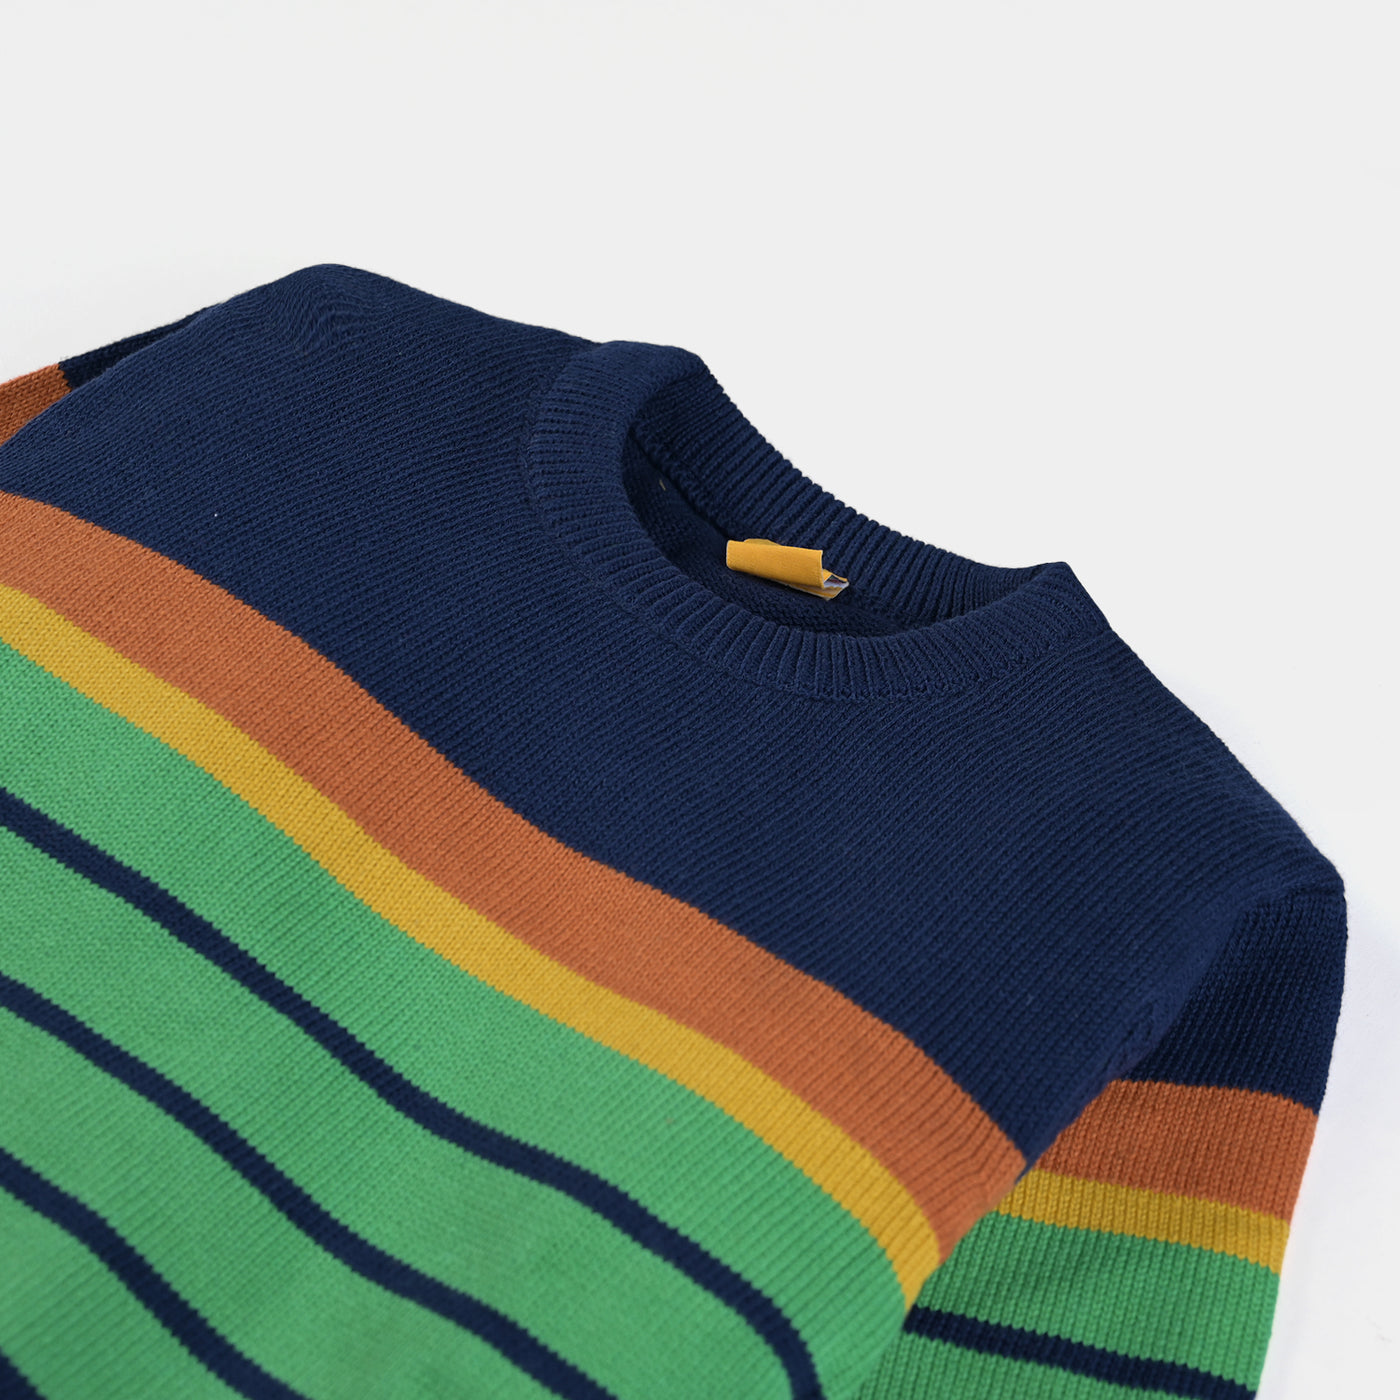 Boys Acrylic Full Sleeves Sweater Striper-Green